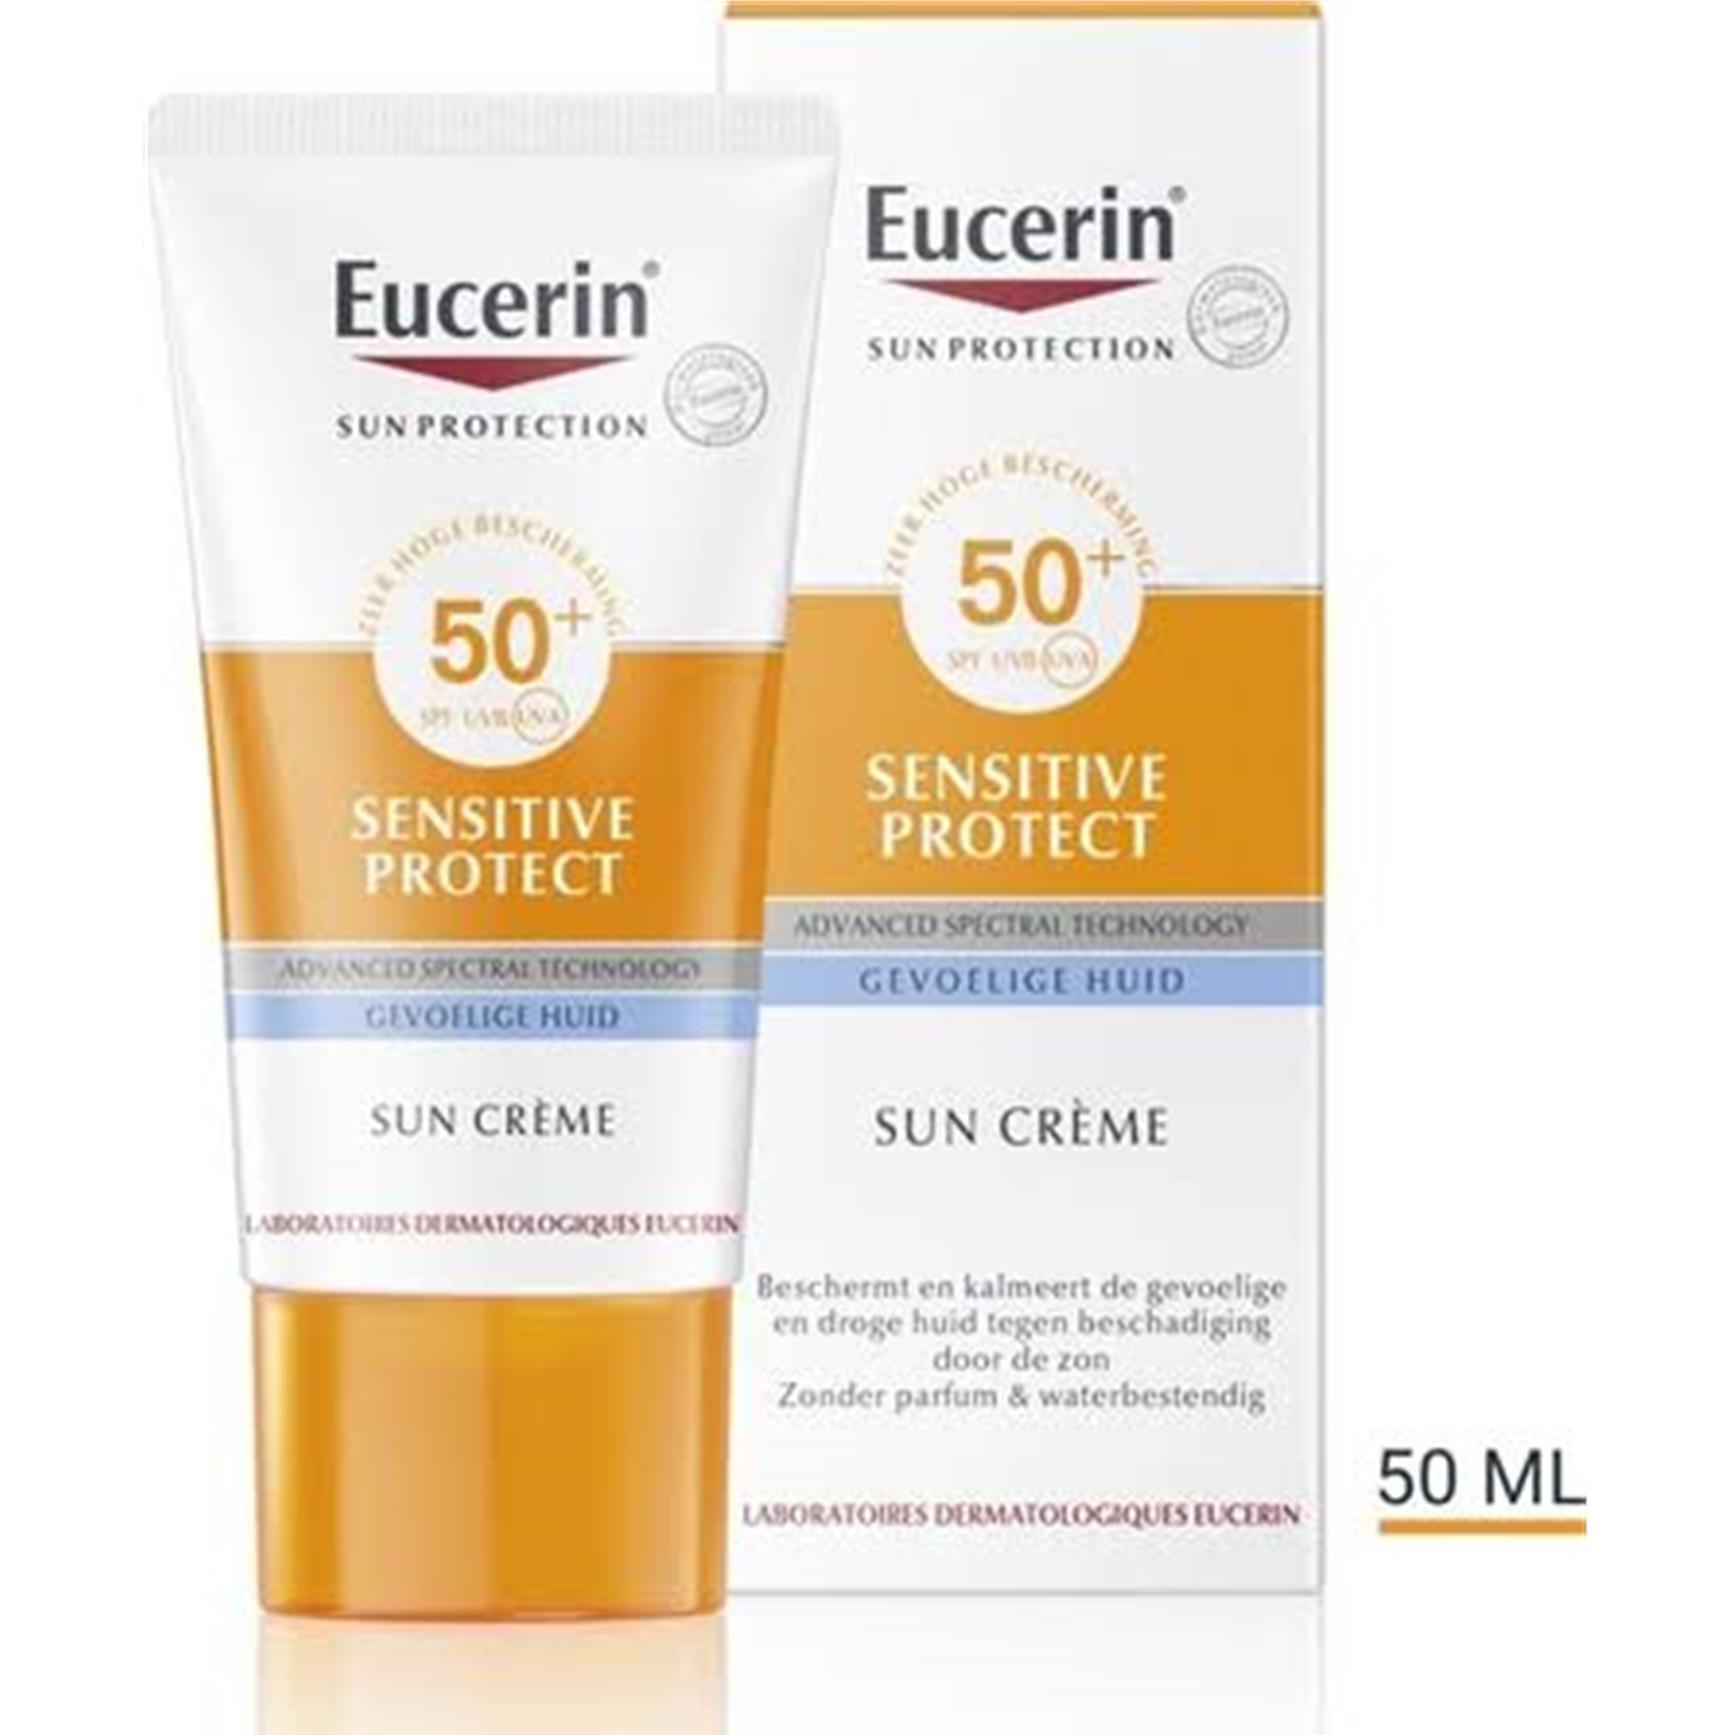 EUCERIN - CREME [SENSITIVE PROTECT 50+] [50 ML]